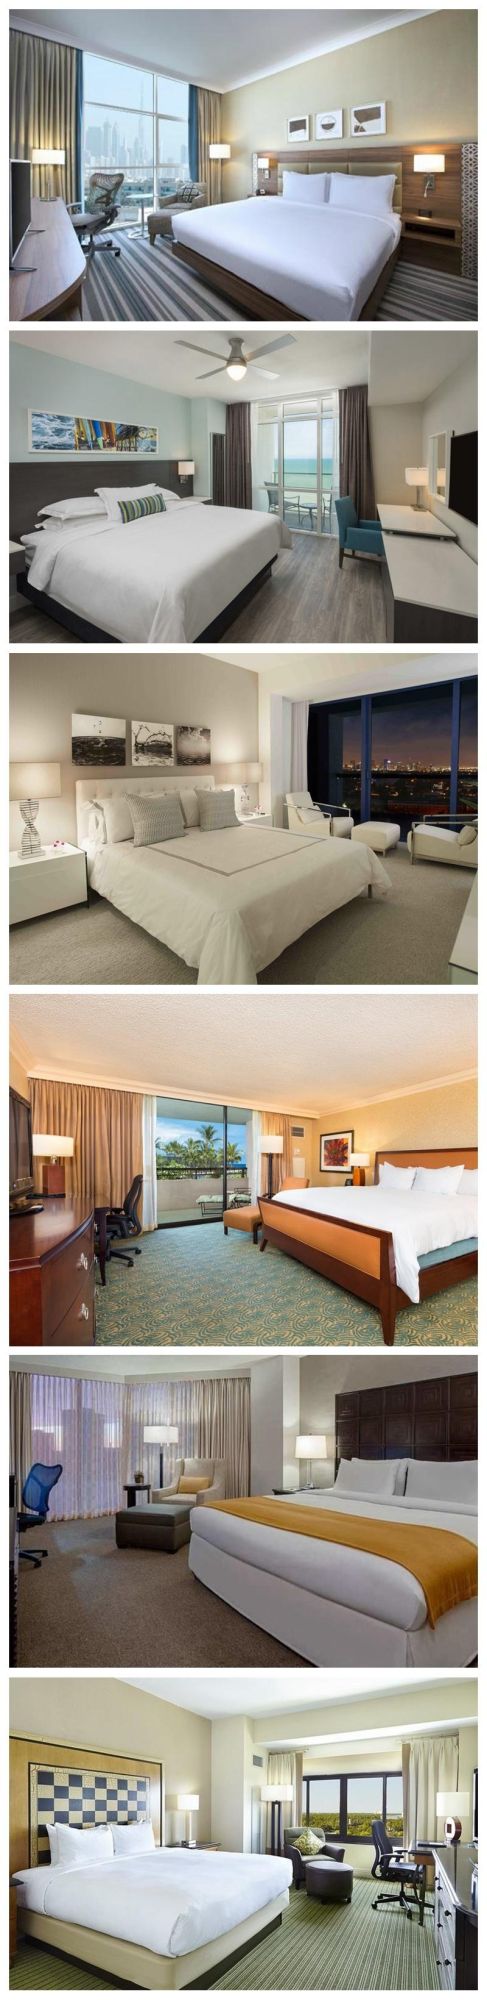 Modern King Size Hotel Bedroom Furniture Sets for 4-5 Holiday Hotel